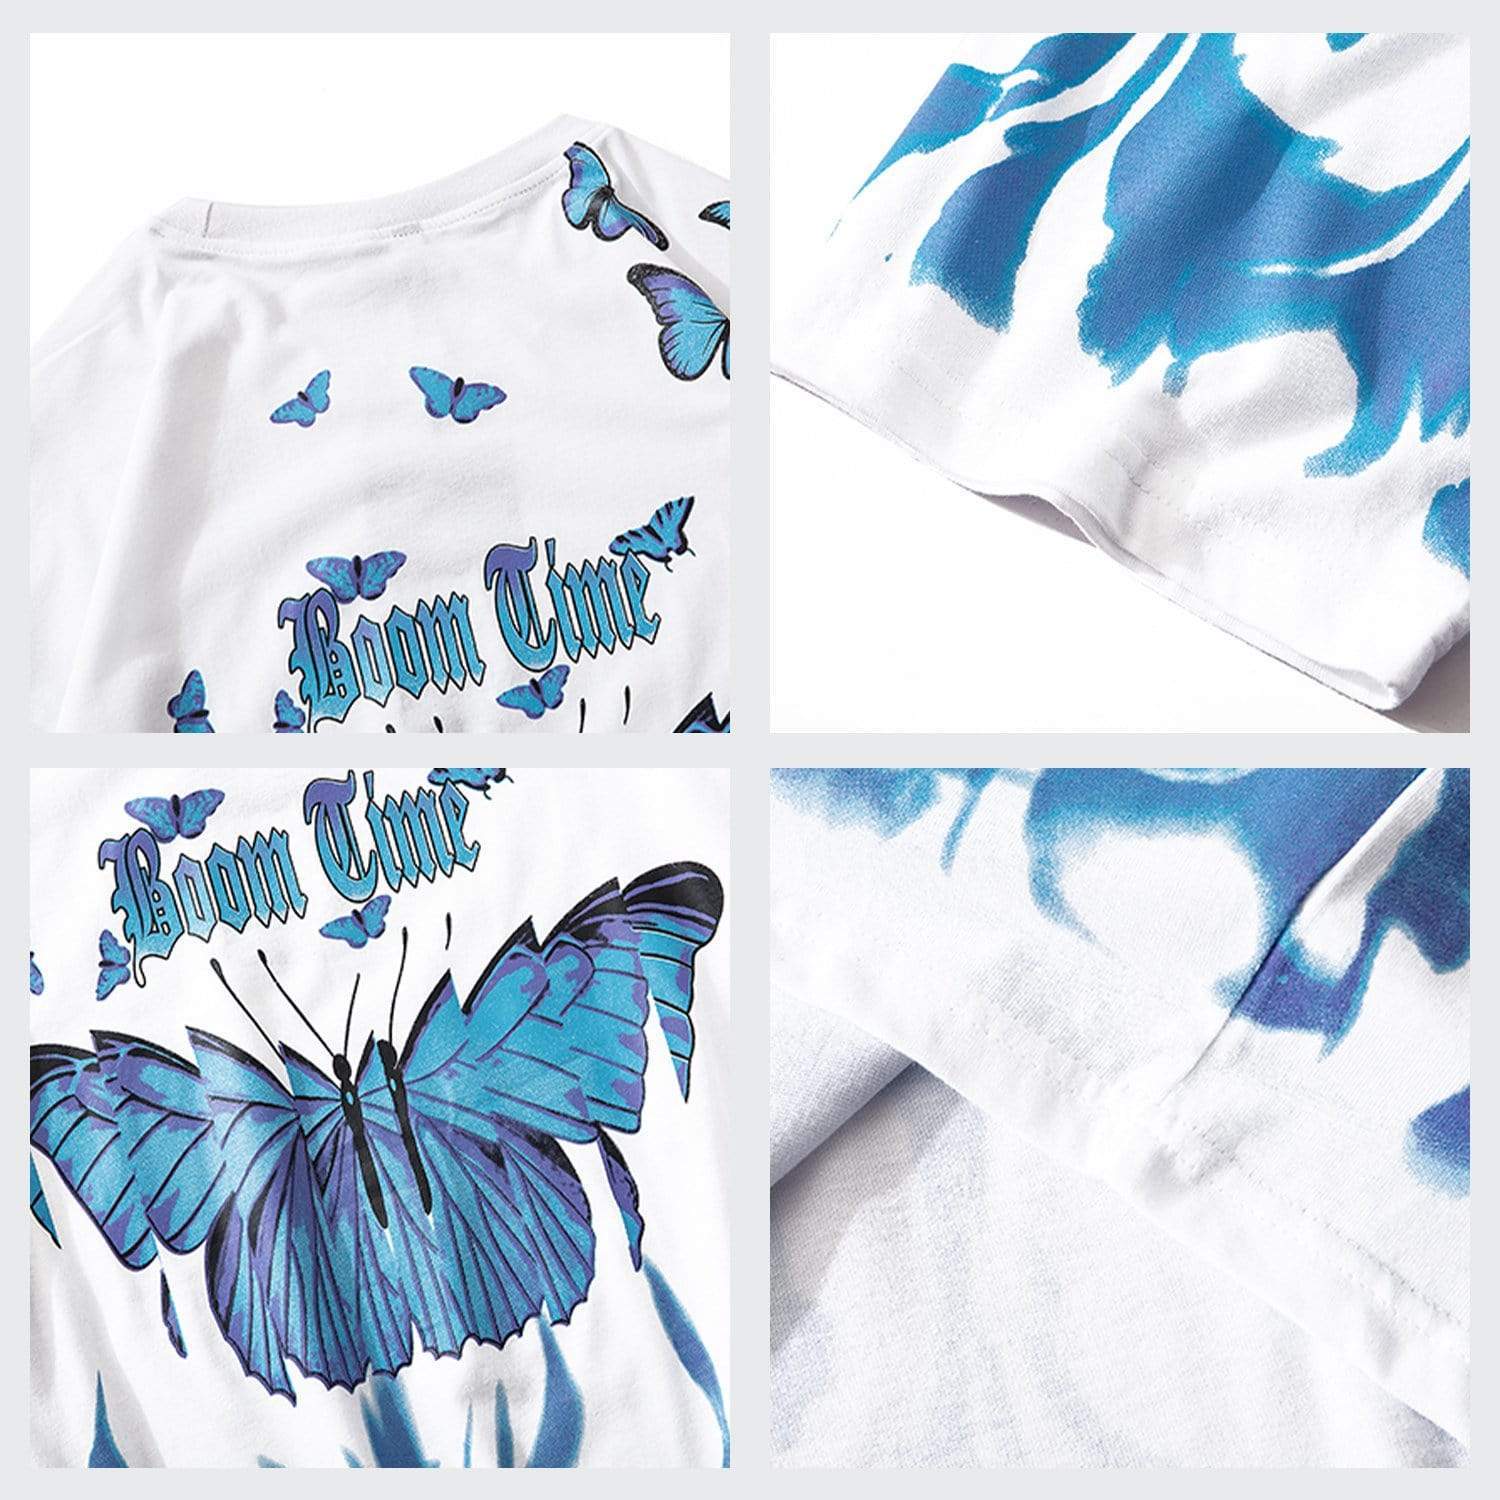 Blue Flame Butterfly T-Shirt Streetwear Brand Techwear Combat Tactical YUGEN THEORY